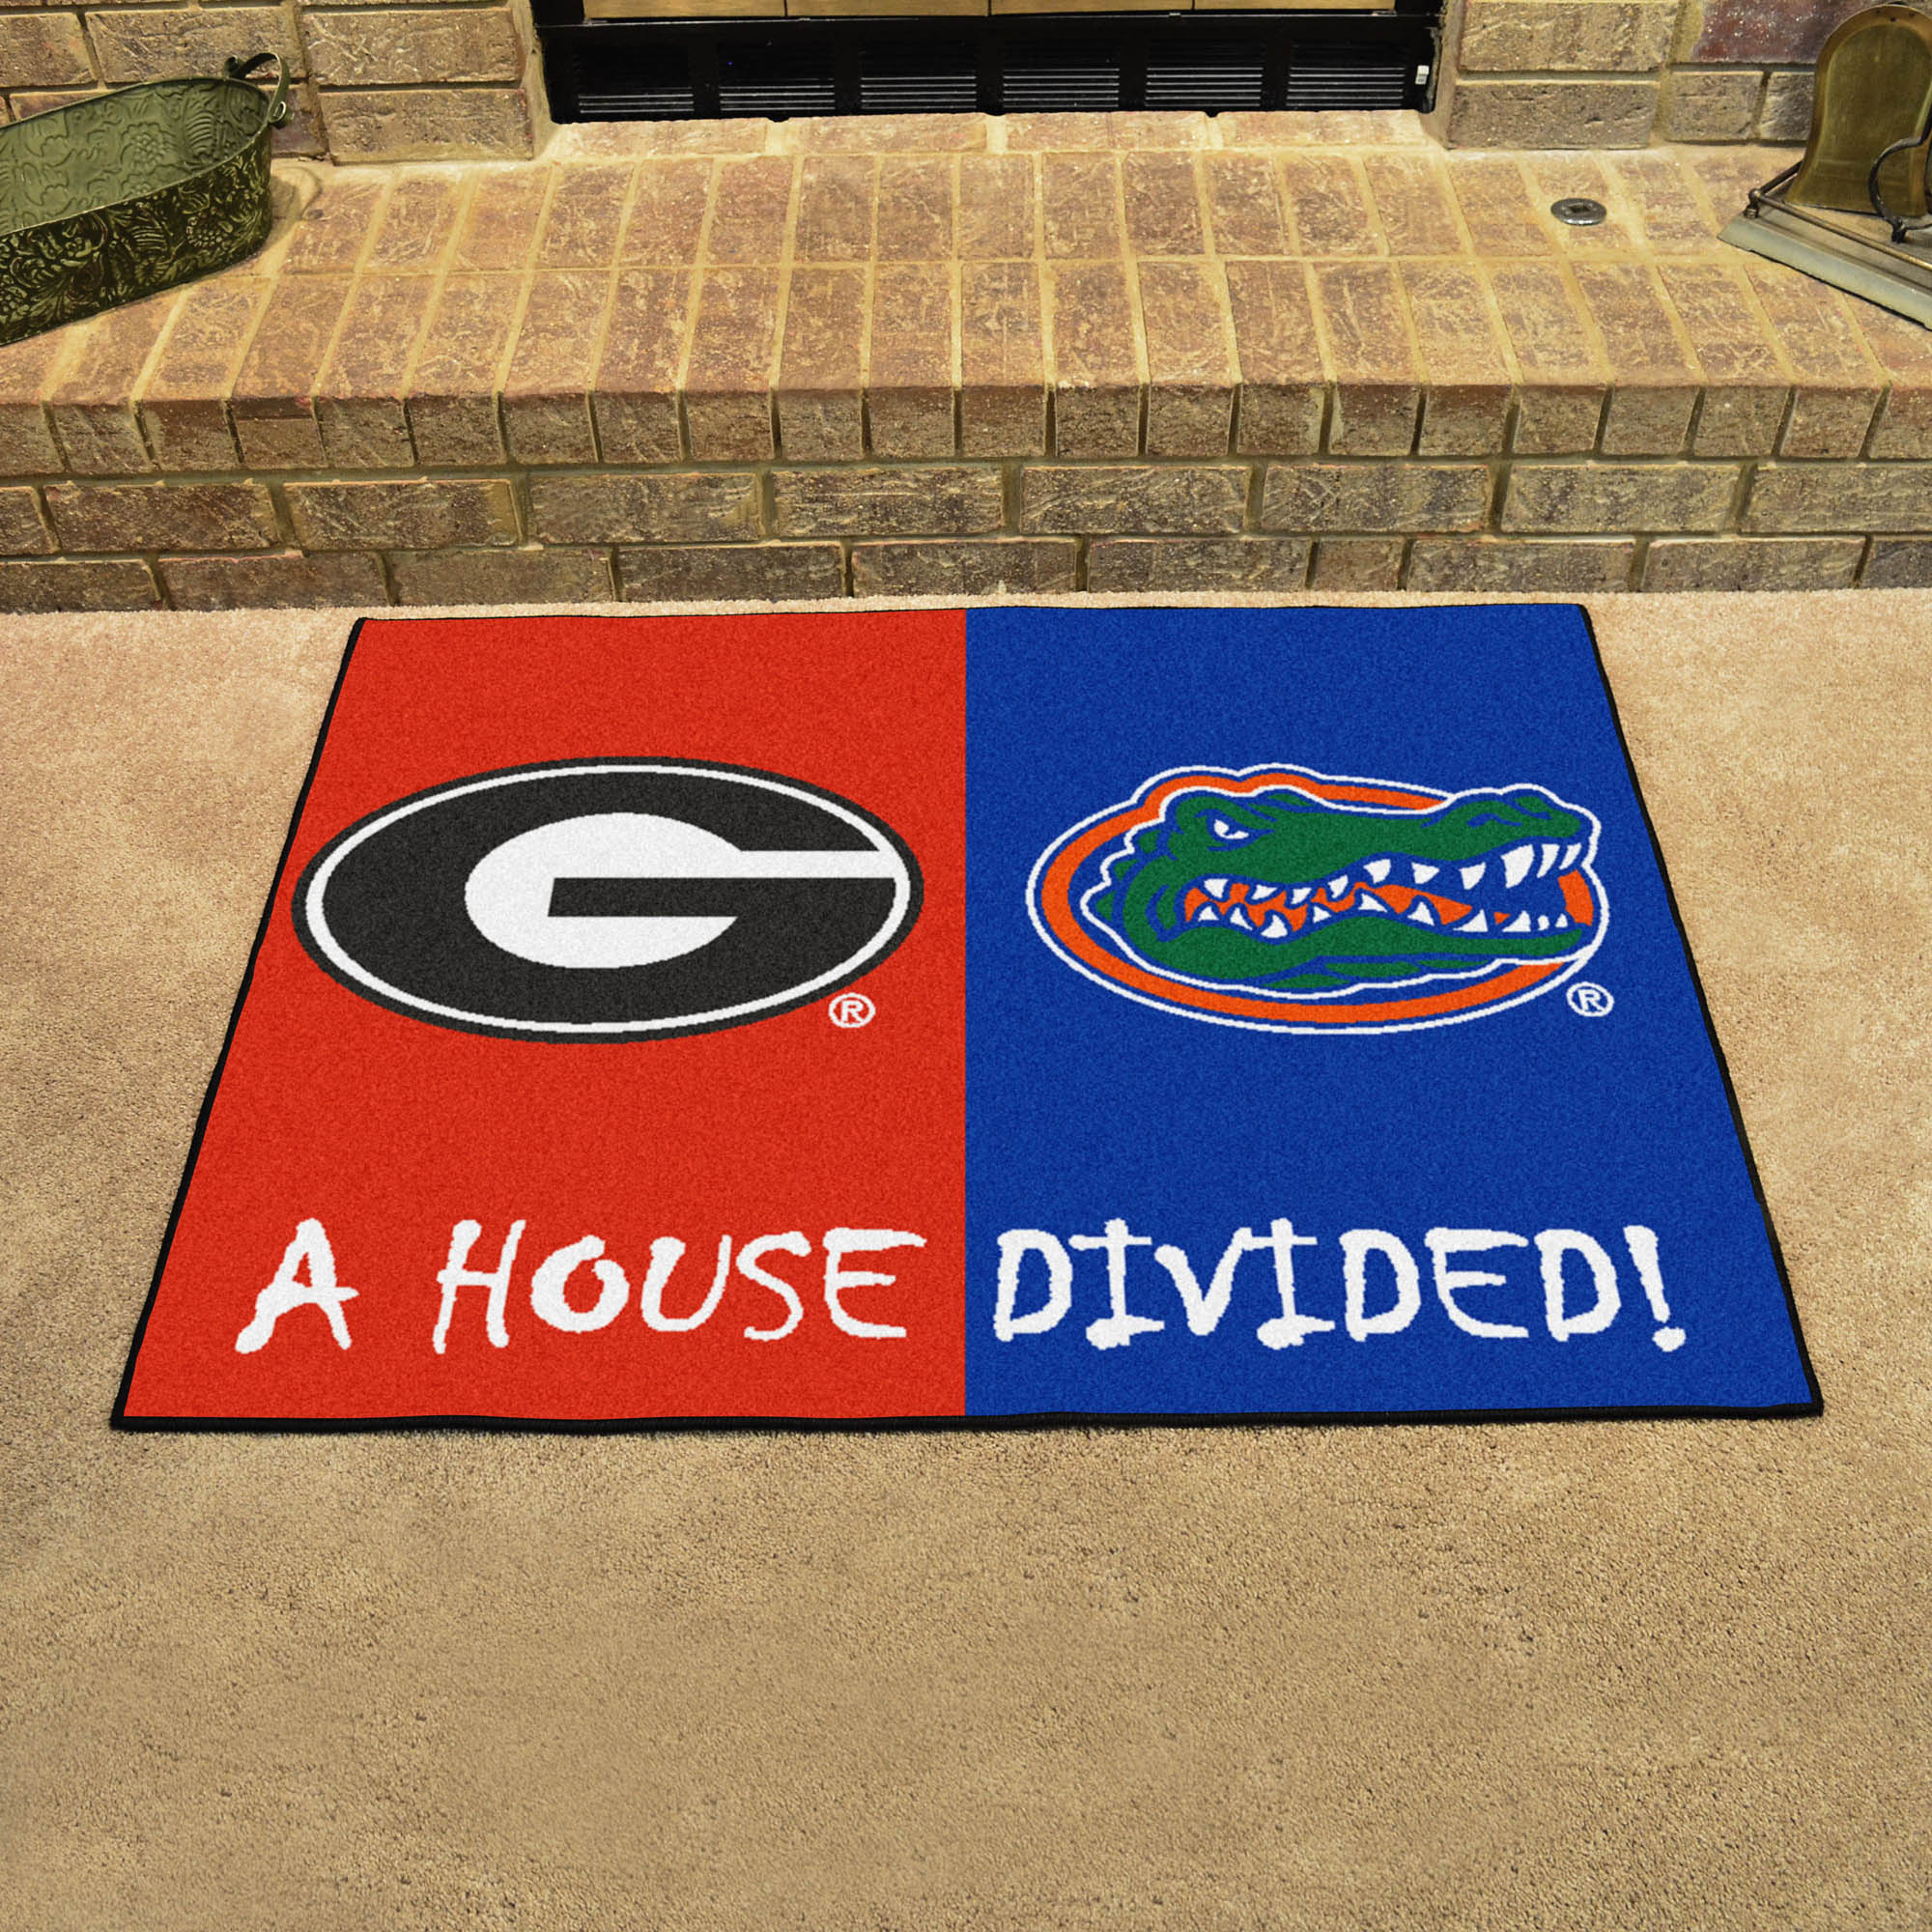 NCAA House Divided Rivalry Rug Georgia Bulldogs - Florida Gators